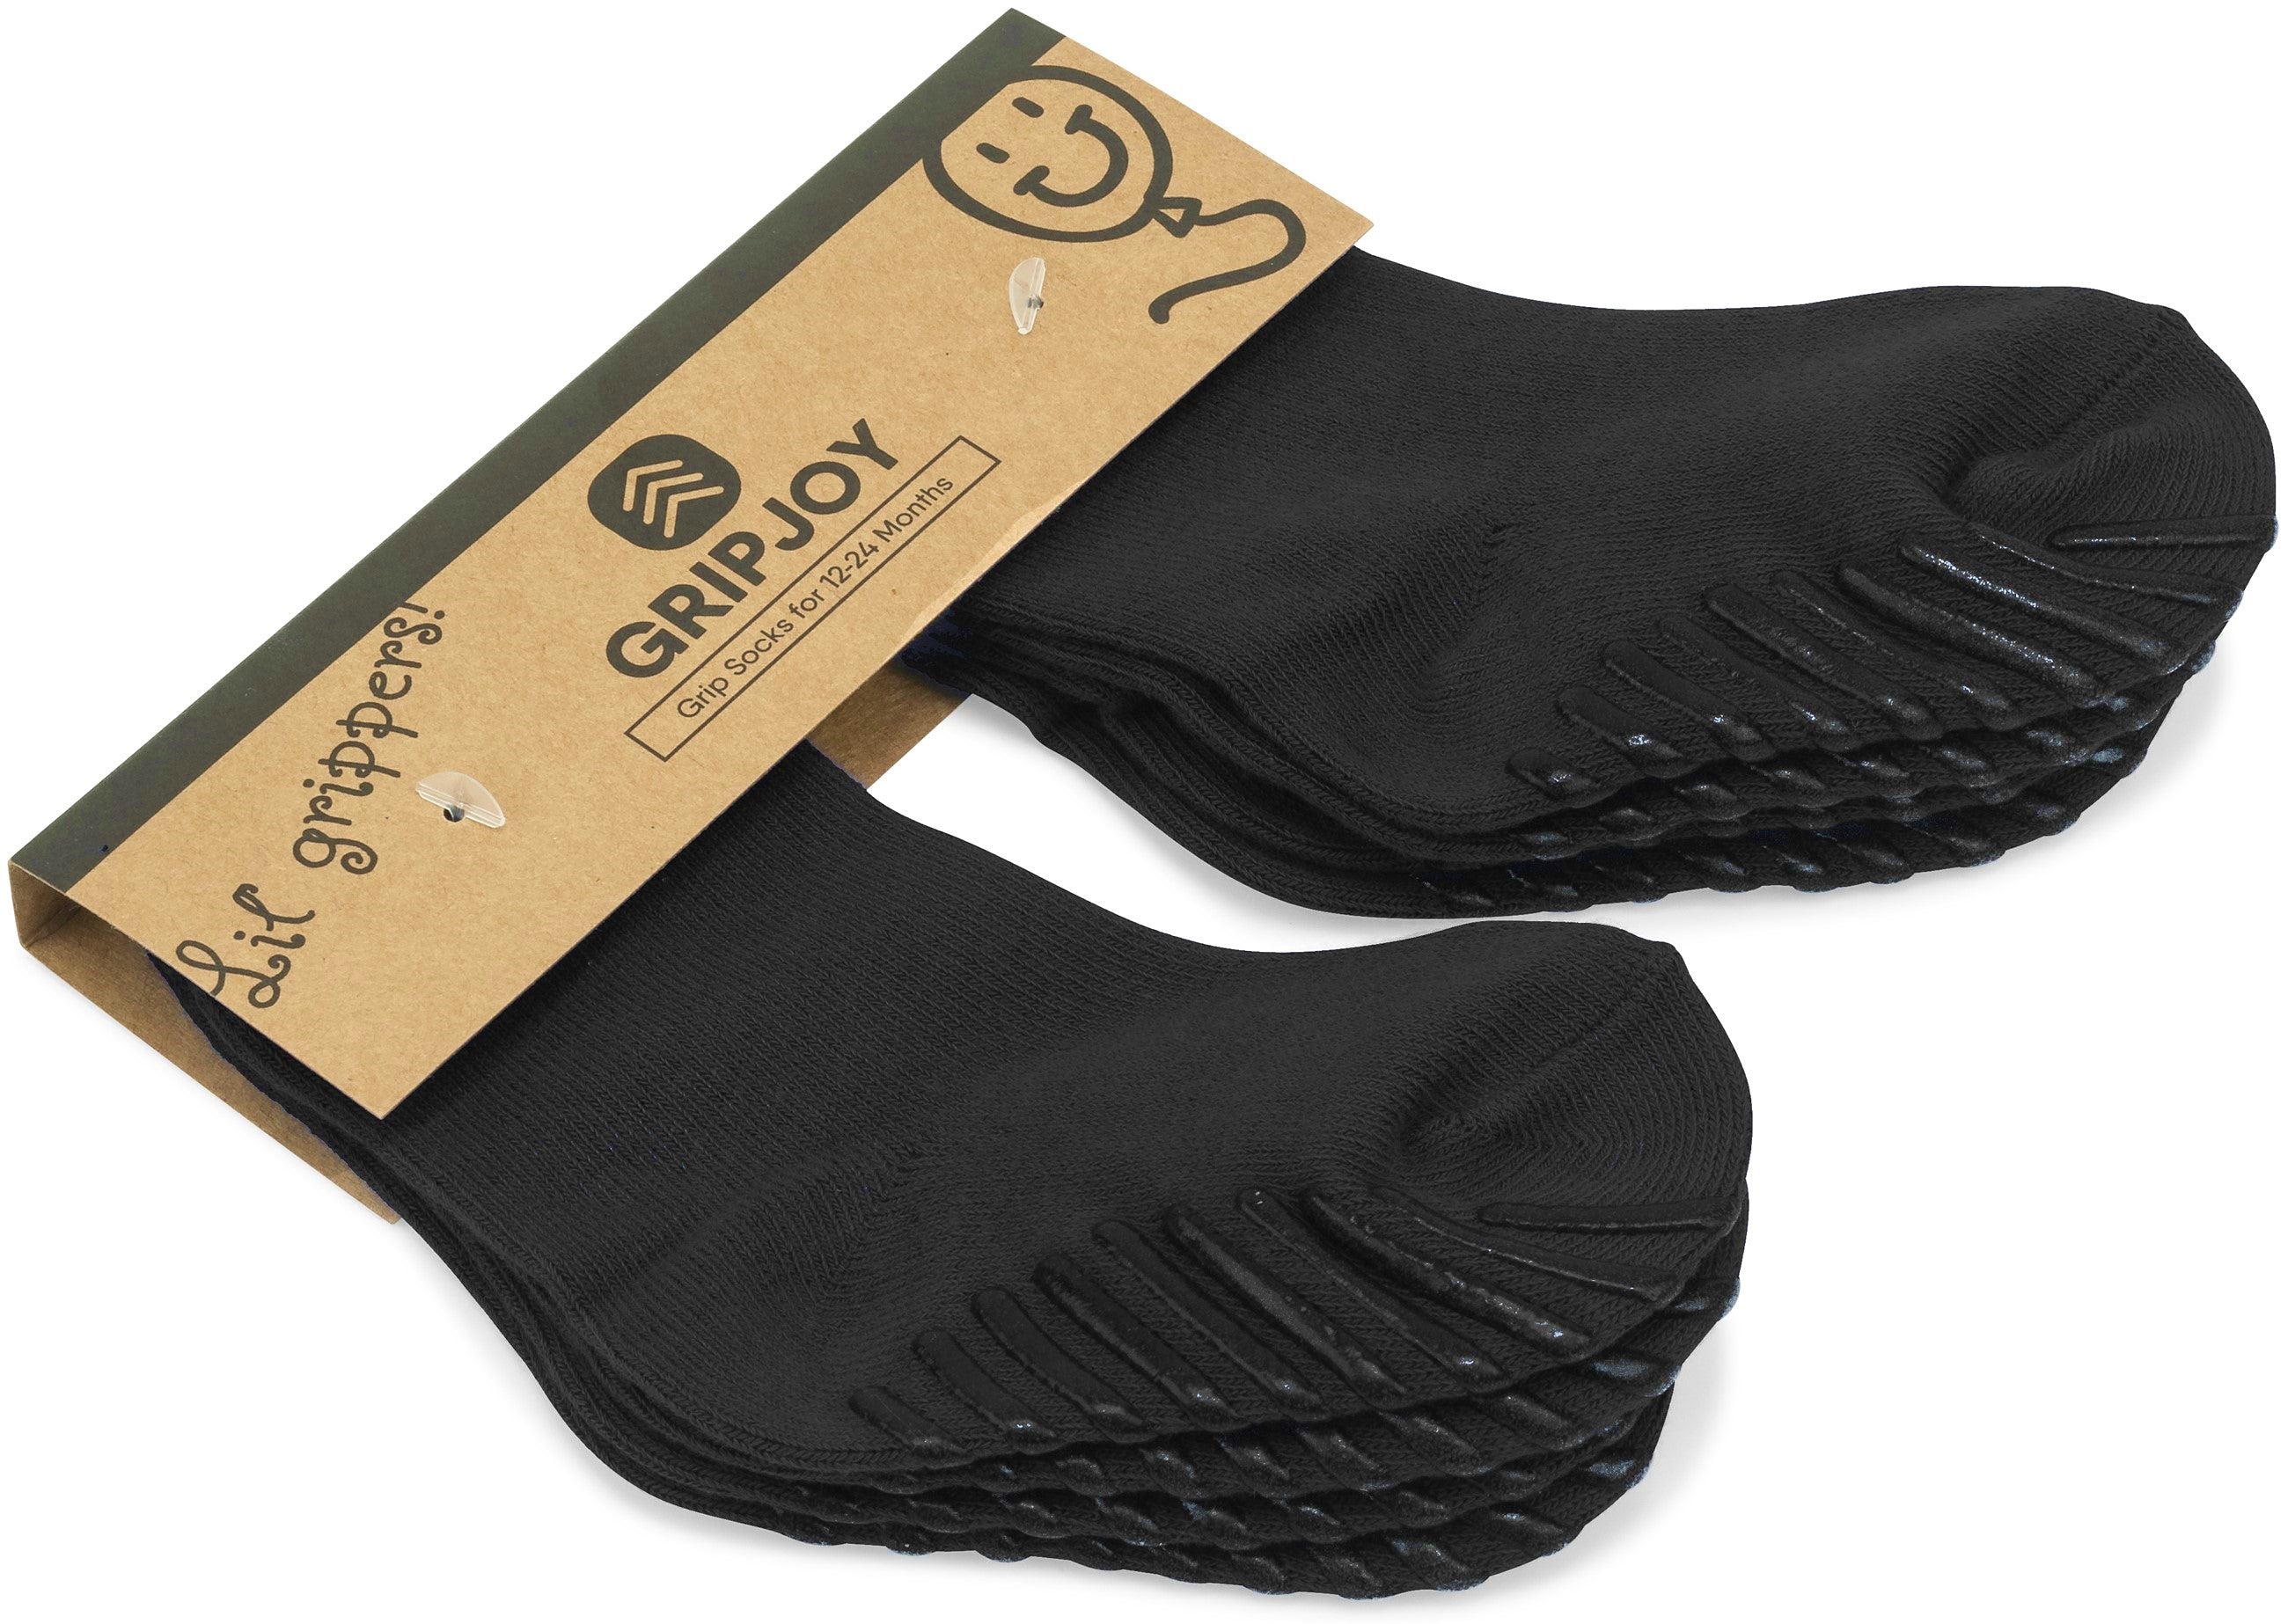 Women's Black/Grey Low Cut Ankle Non Skid Socks - 3 pairs